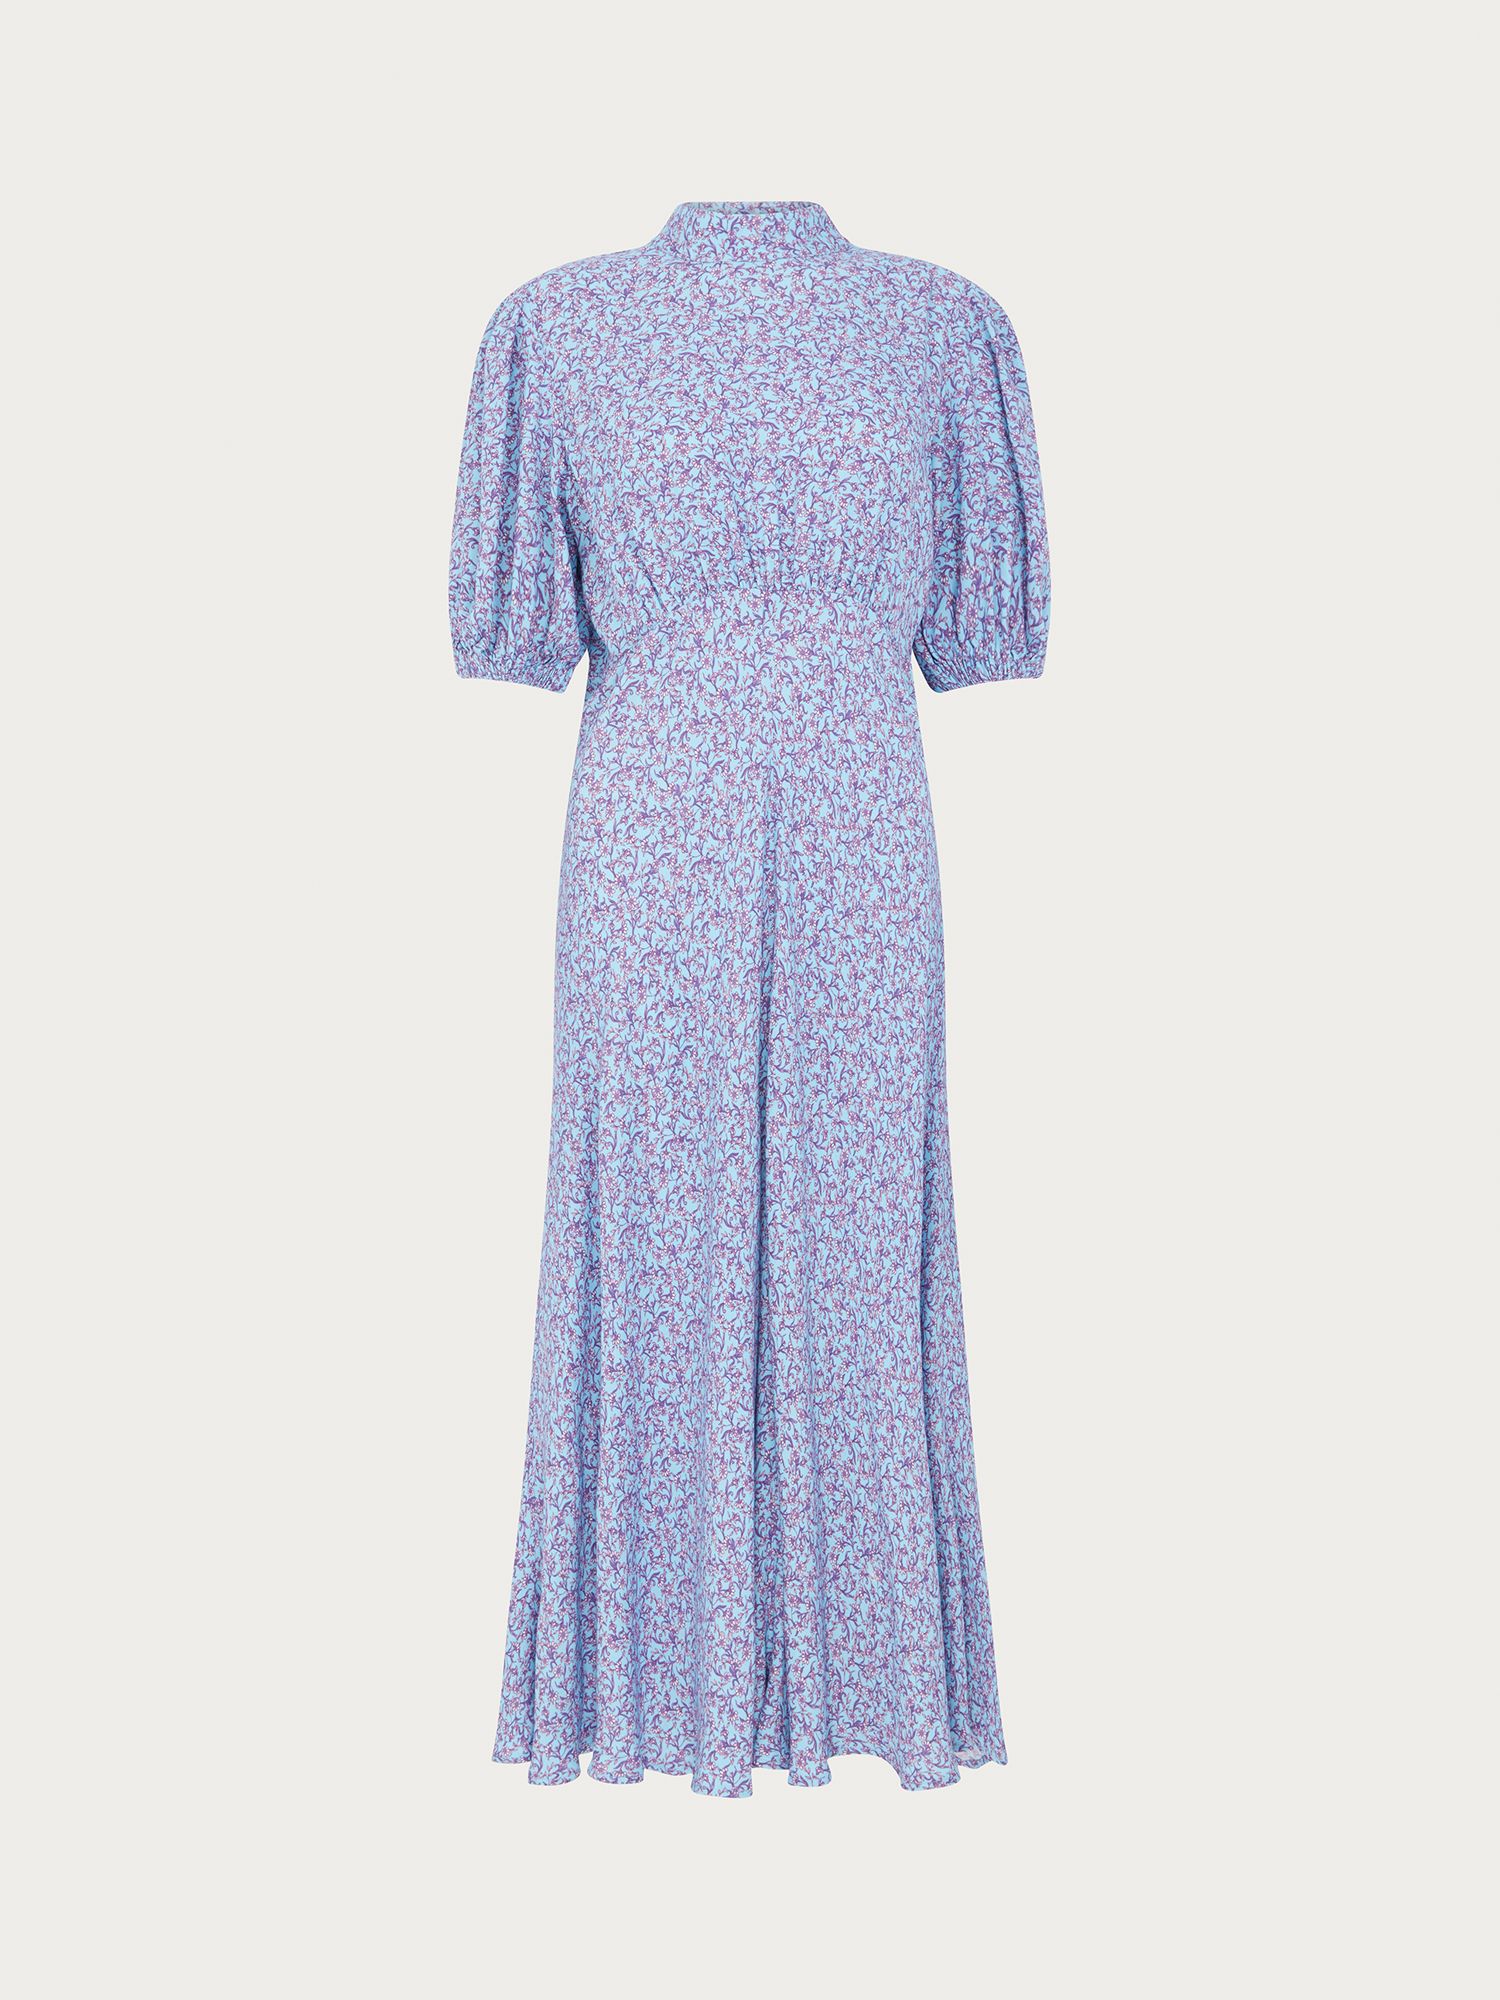 Ghost Luella Floral Print Midi Dress, Blue at John Lewis & Partners